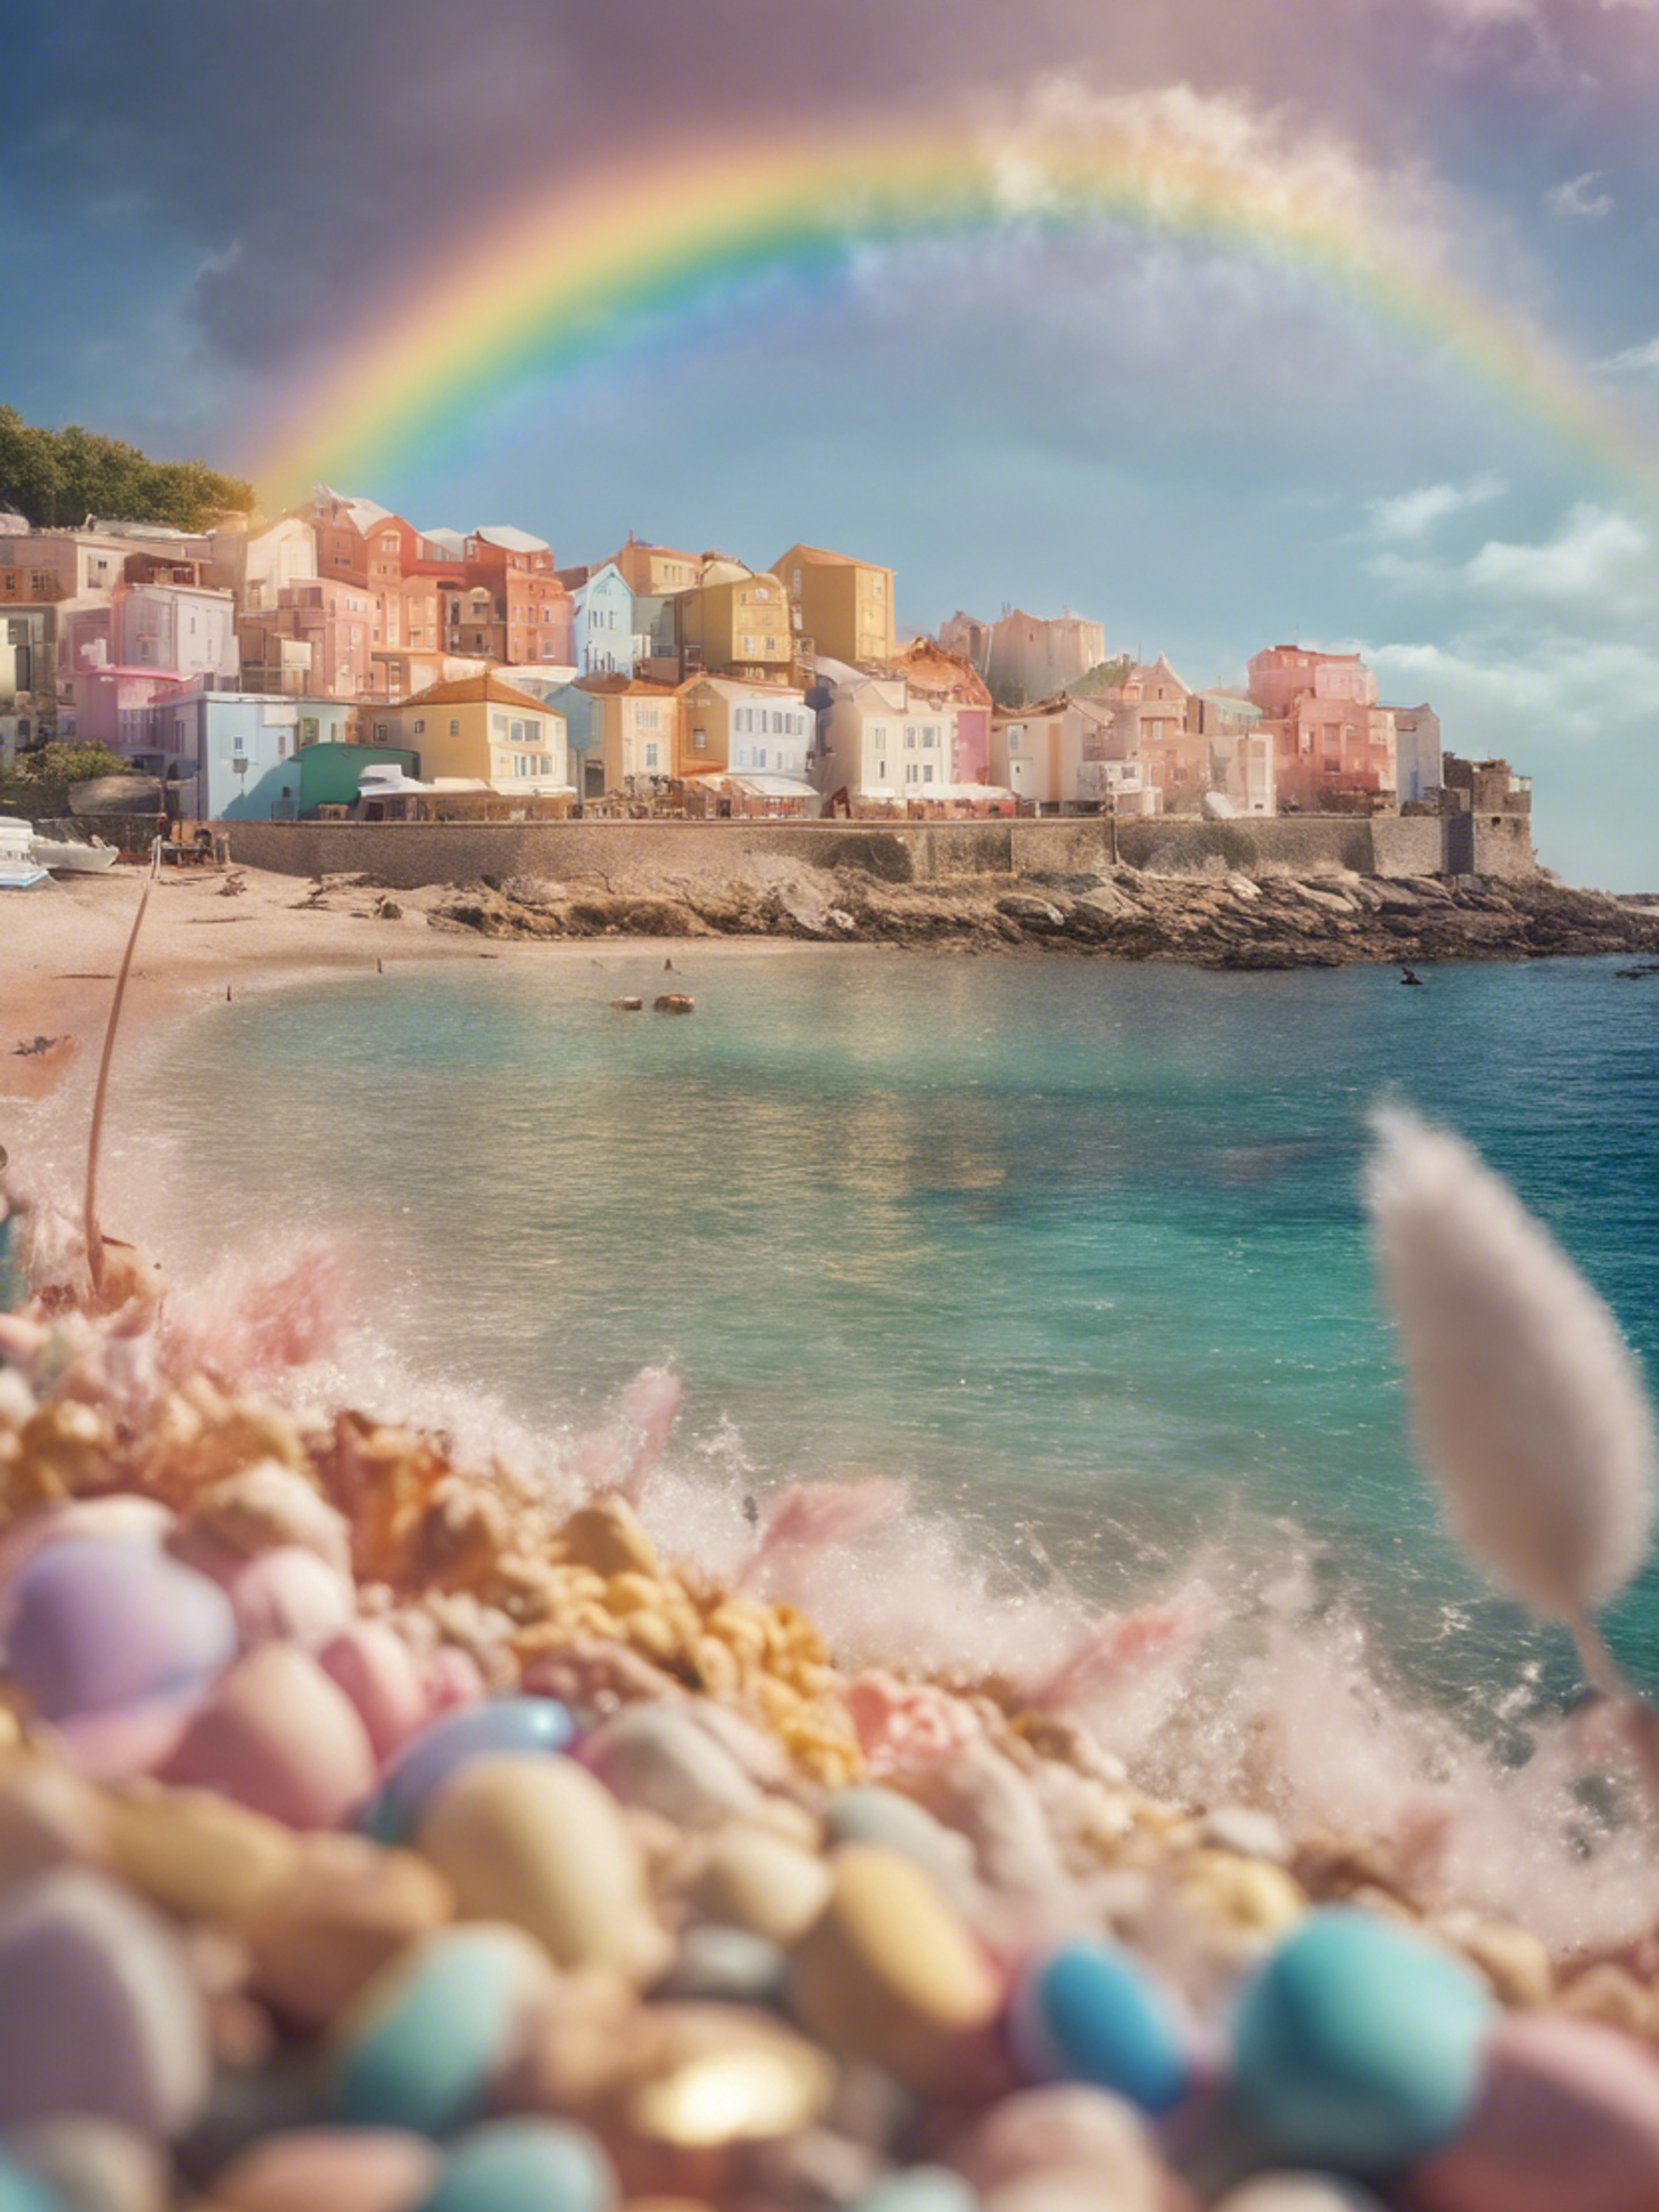 A picturesque pastel seaside town nestled under the arc of sun-emerged rainbow. Wallpaper[e7e781705d0e499a9cf6]